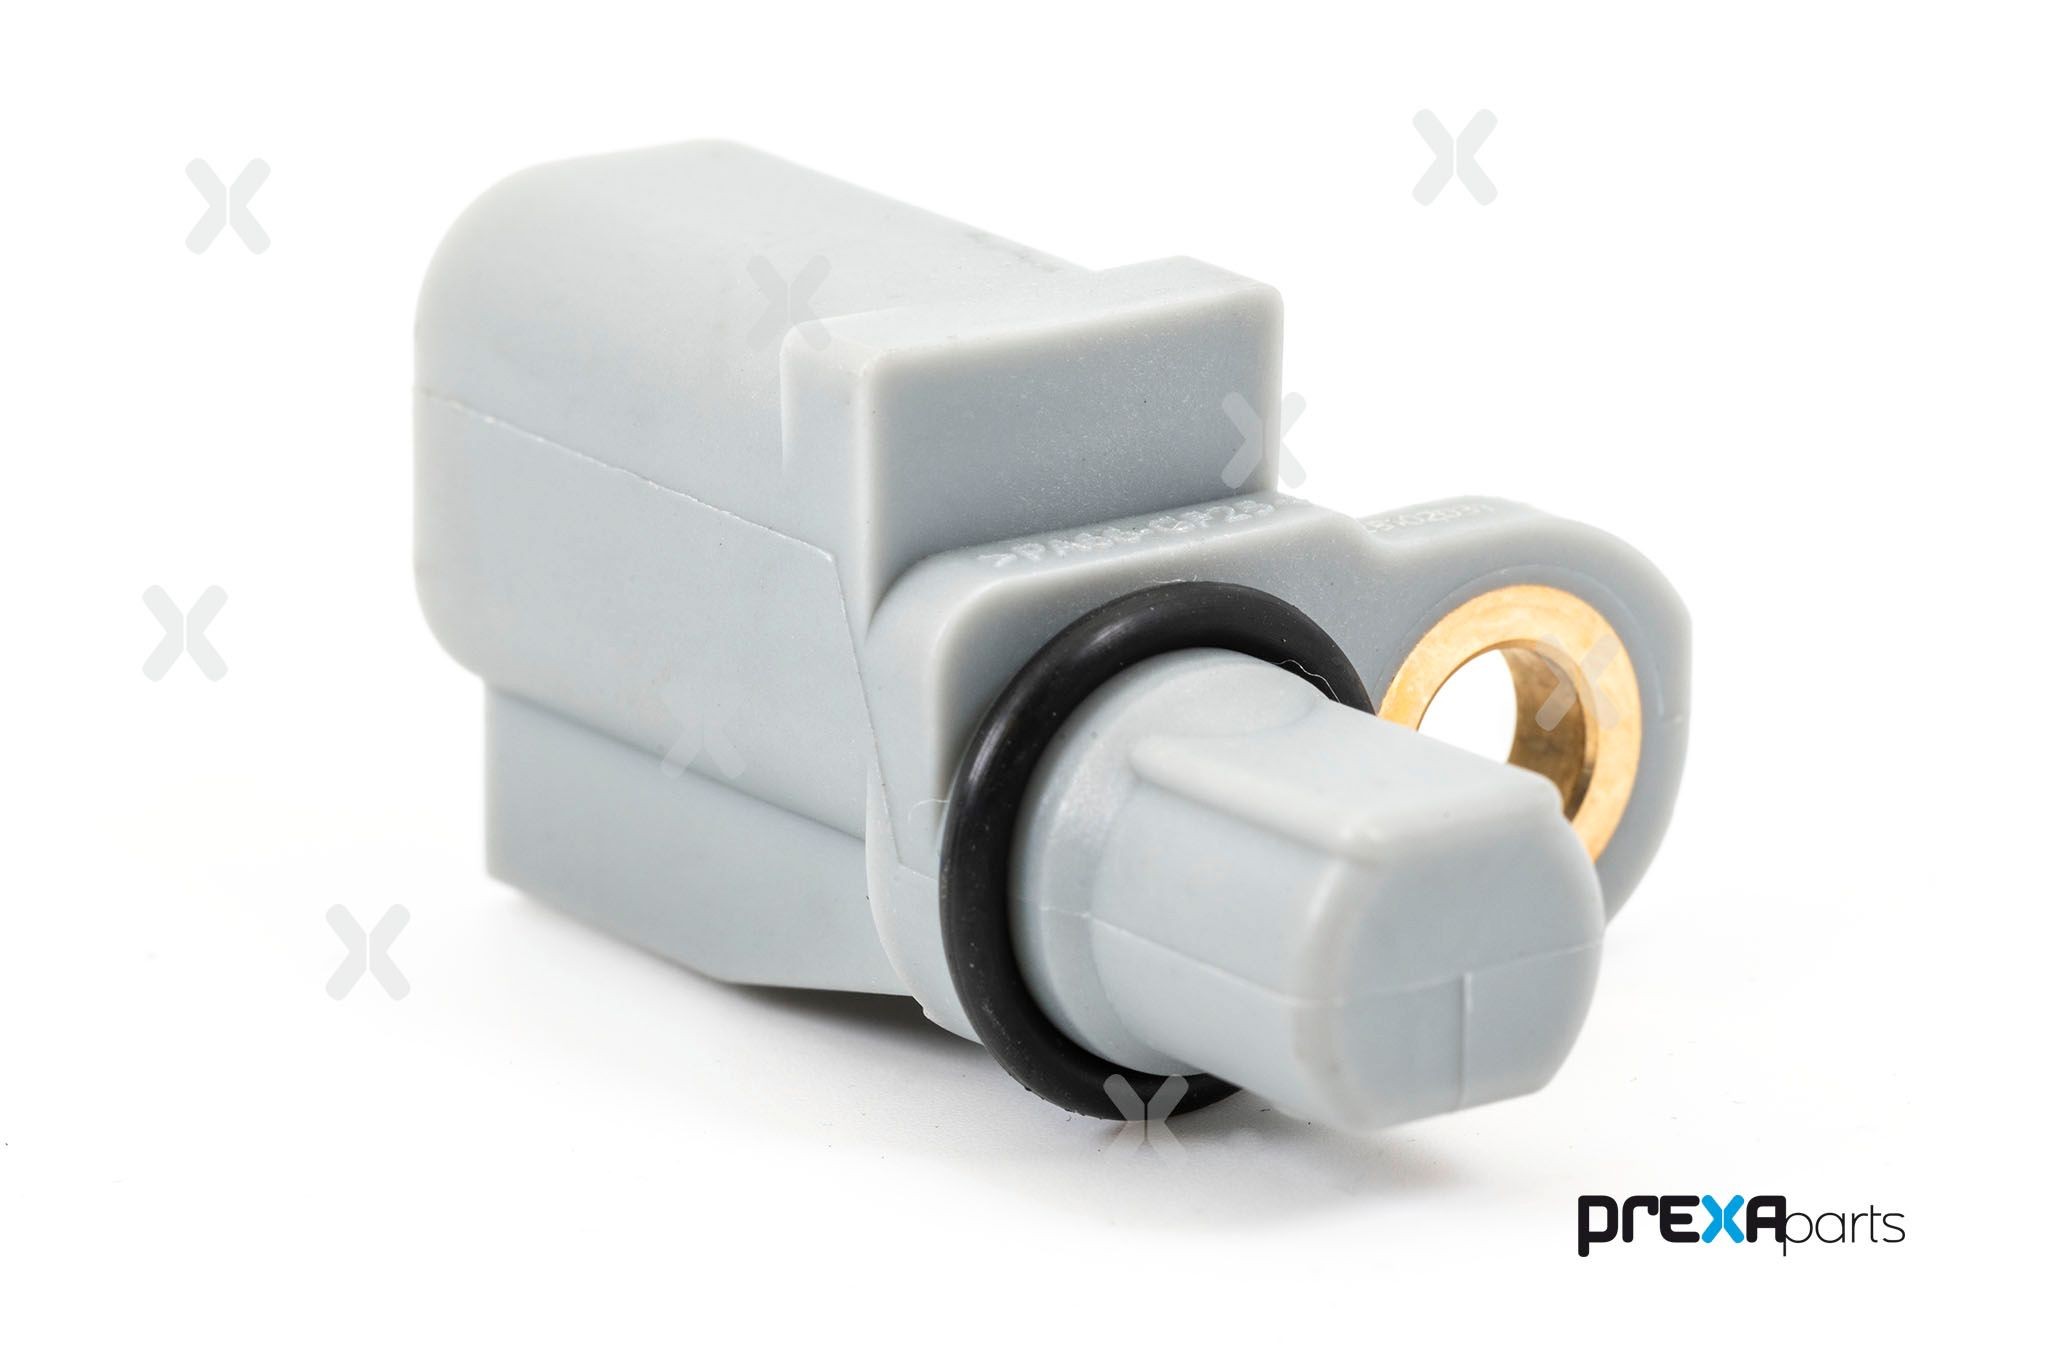 PREXAparts Transmission Filter P120068 buy